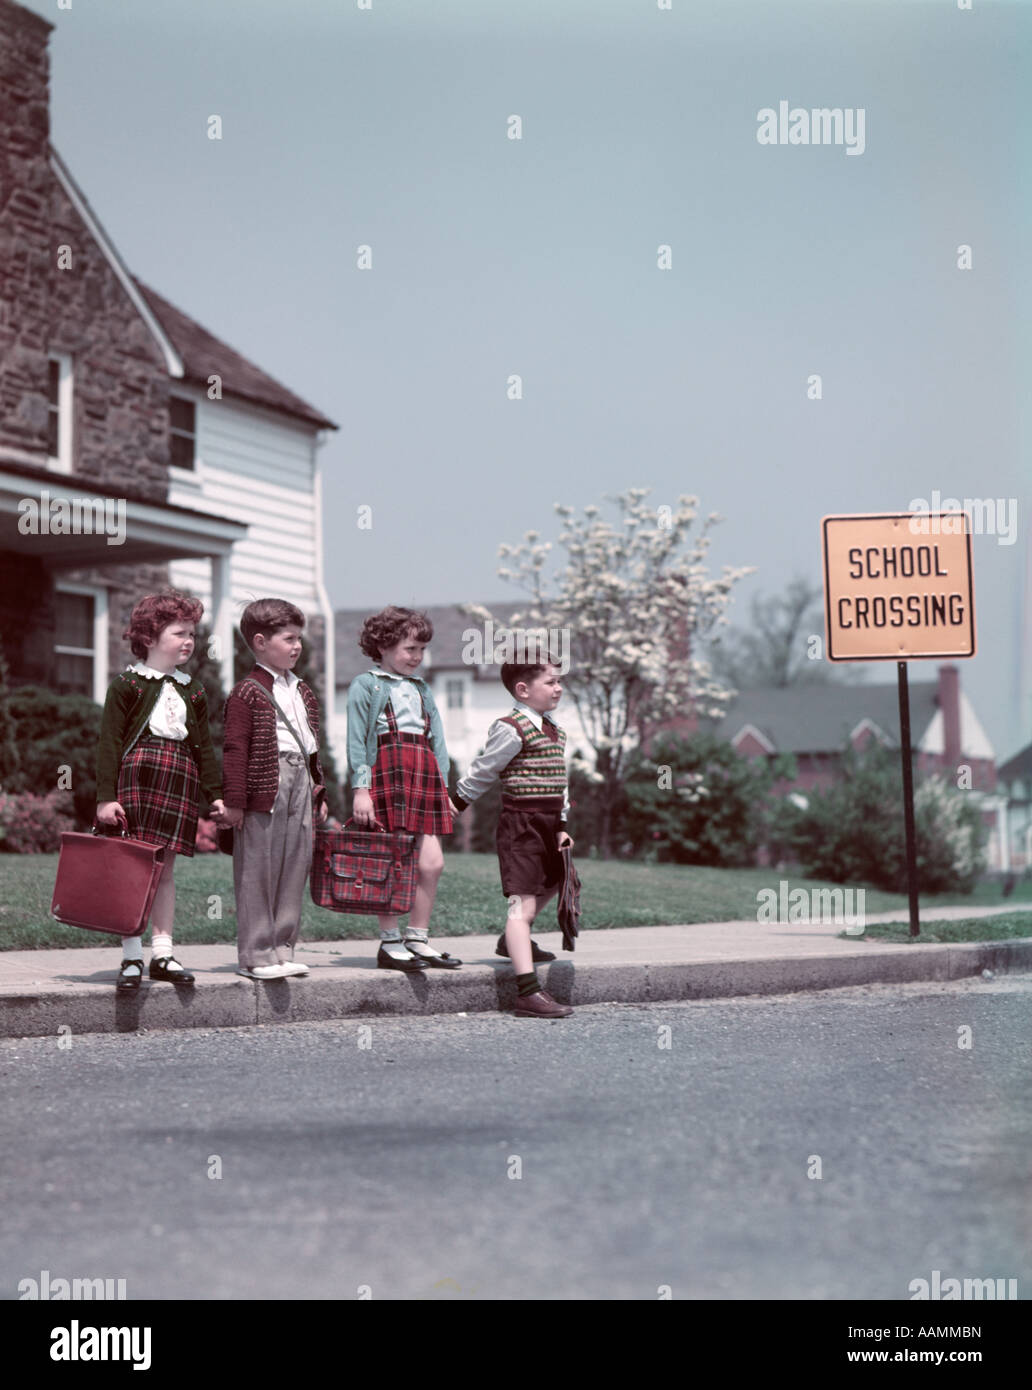 1950s 4 KIDS BOYS GIRLS SIDEWALK ABOUT CROSS STREET SCHOOL CROSSING SIGN HOUSE COMMUNITY SUBURBAN NEIGHBORHOOD Stock Photo